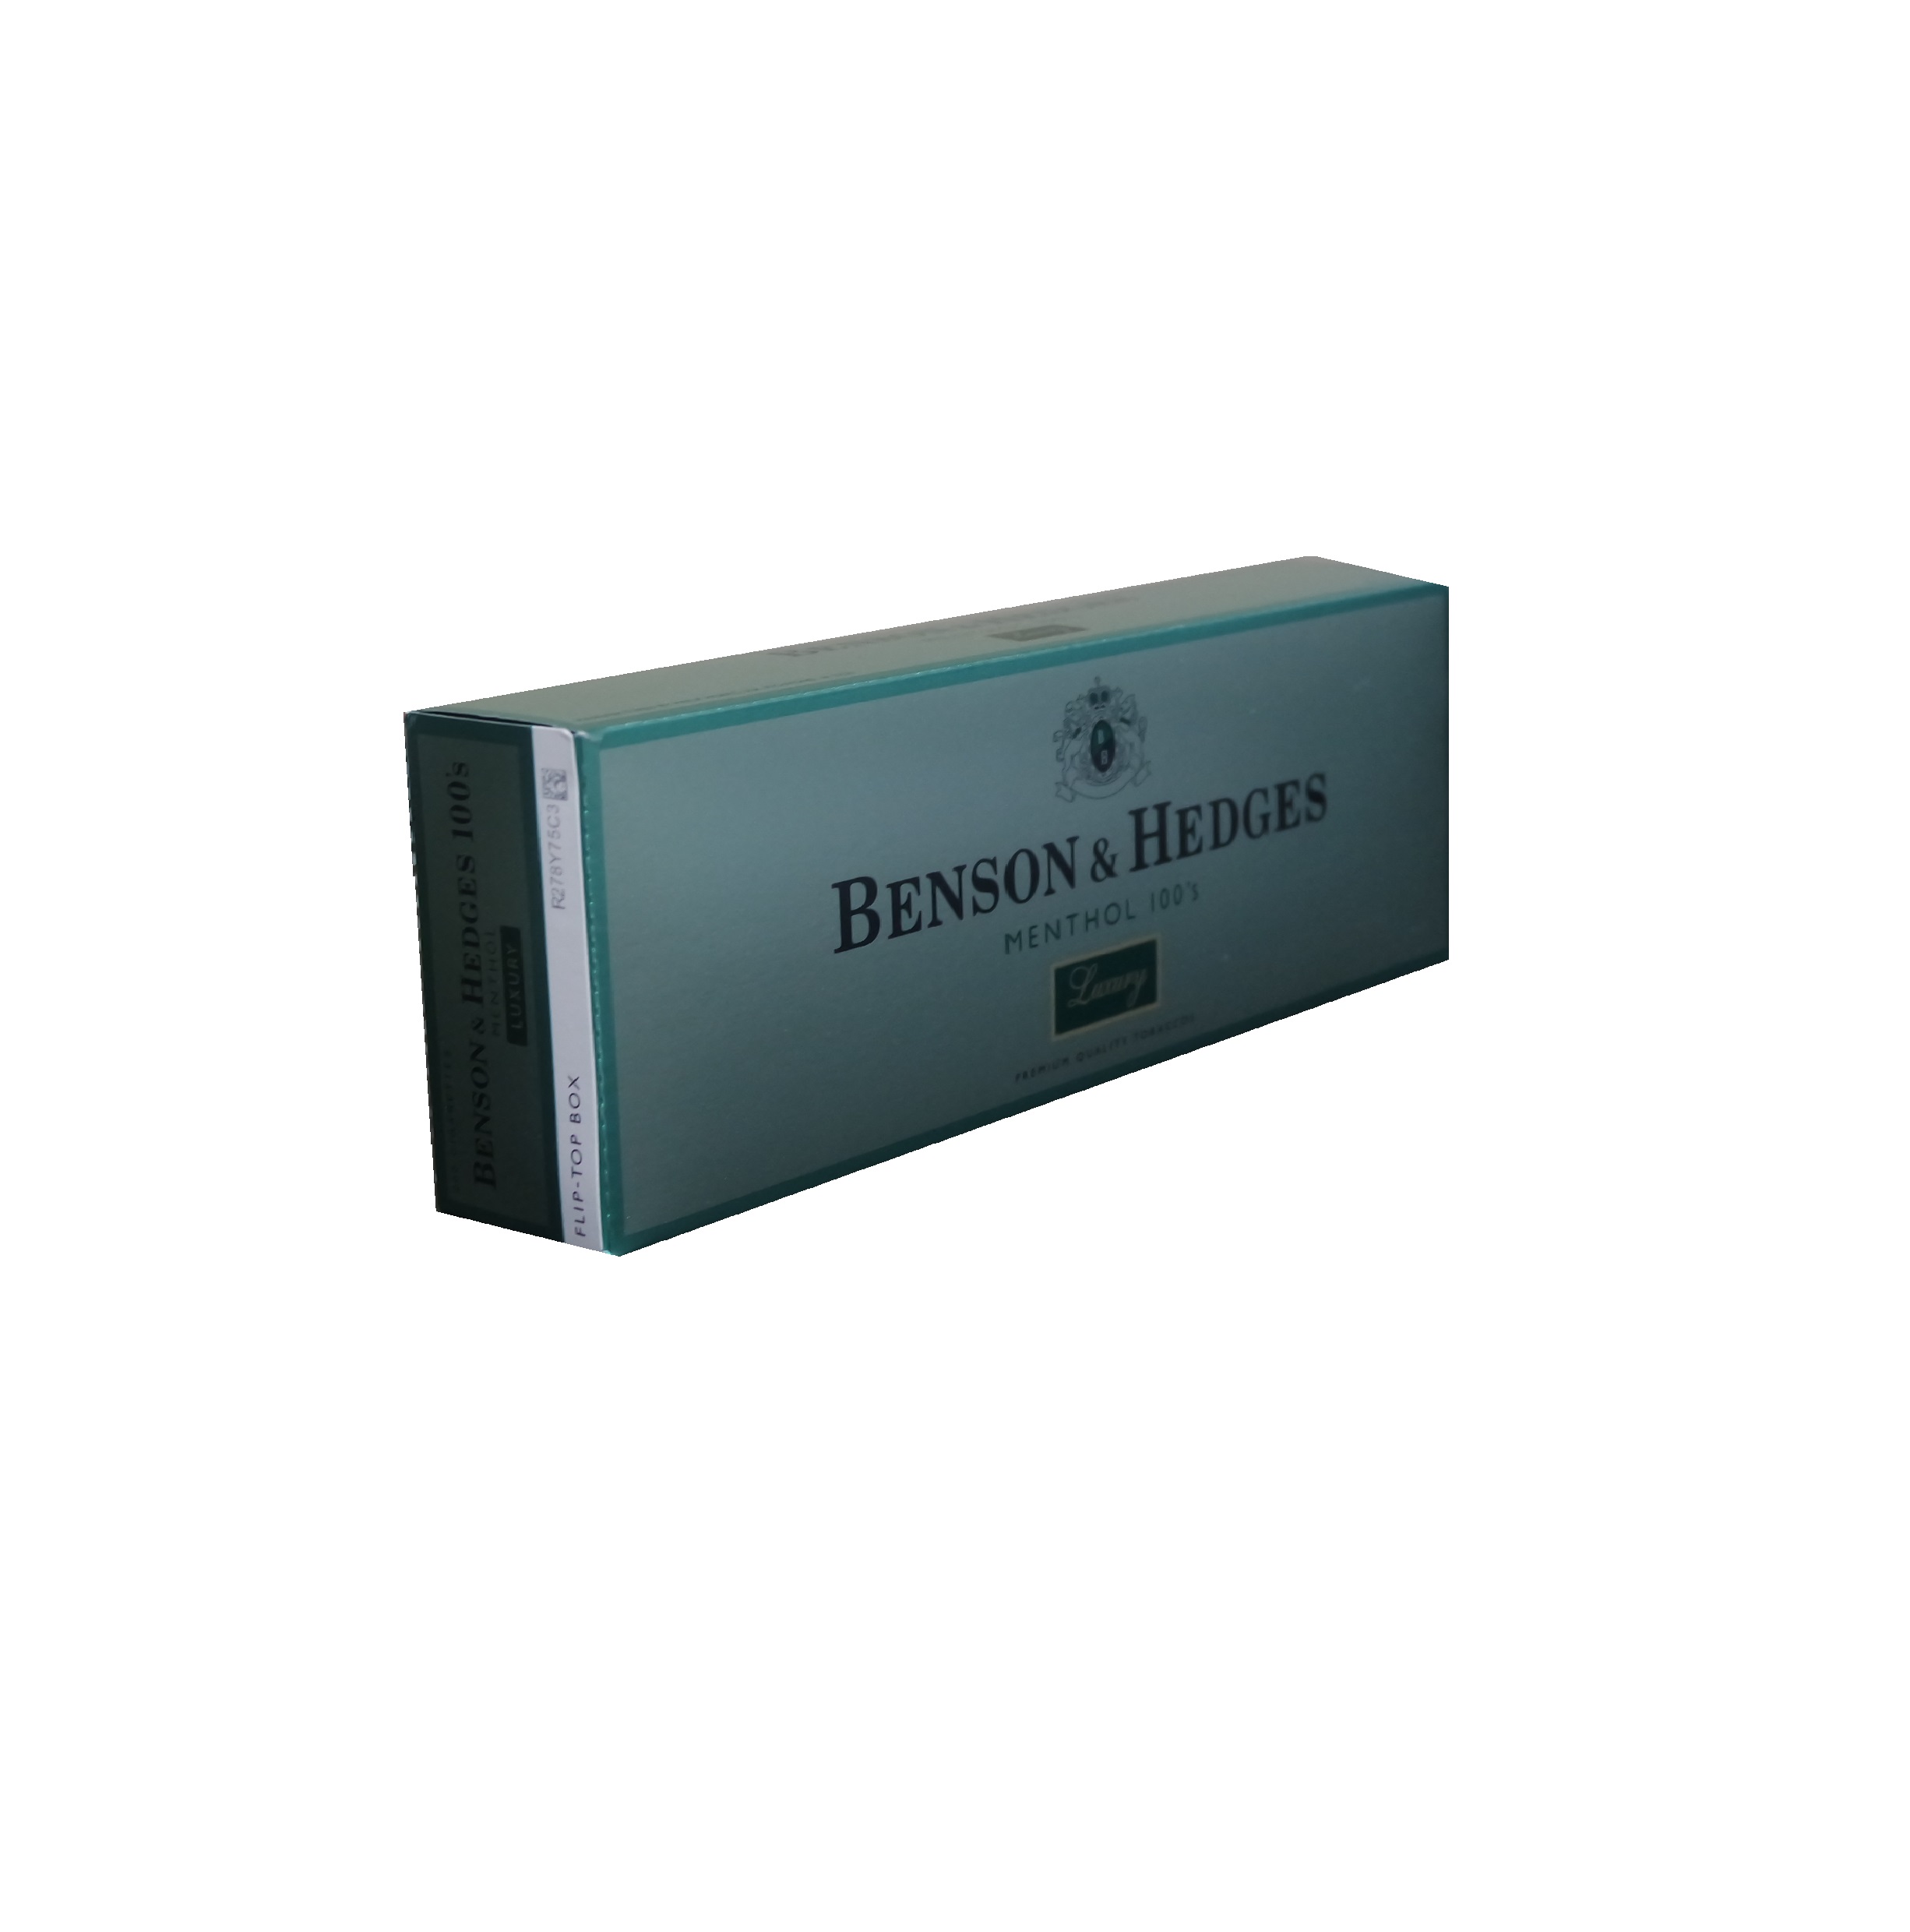 B&h luxury menthol 100 box